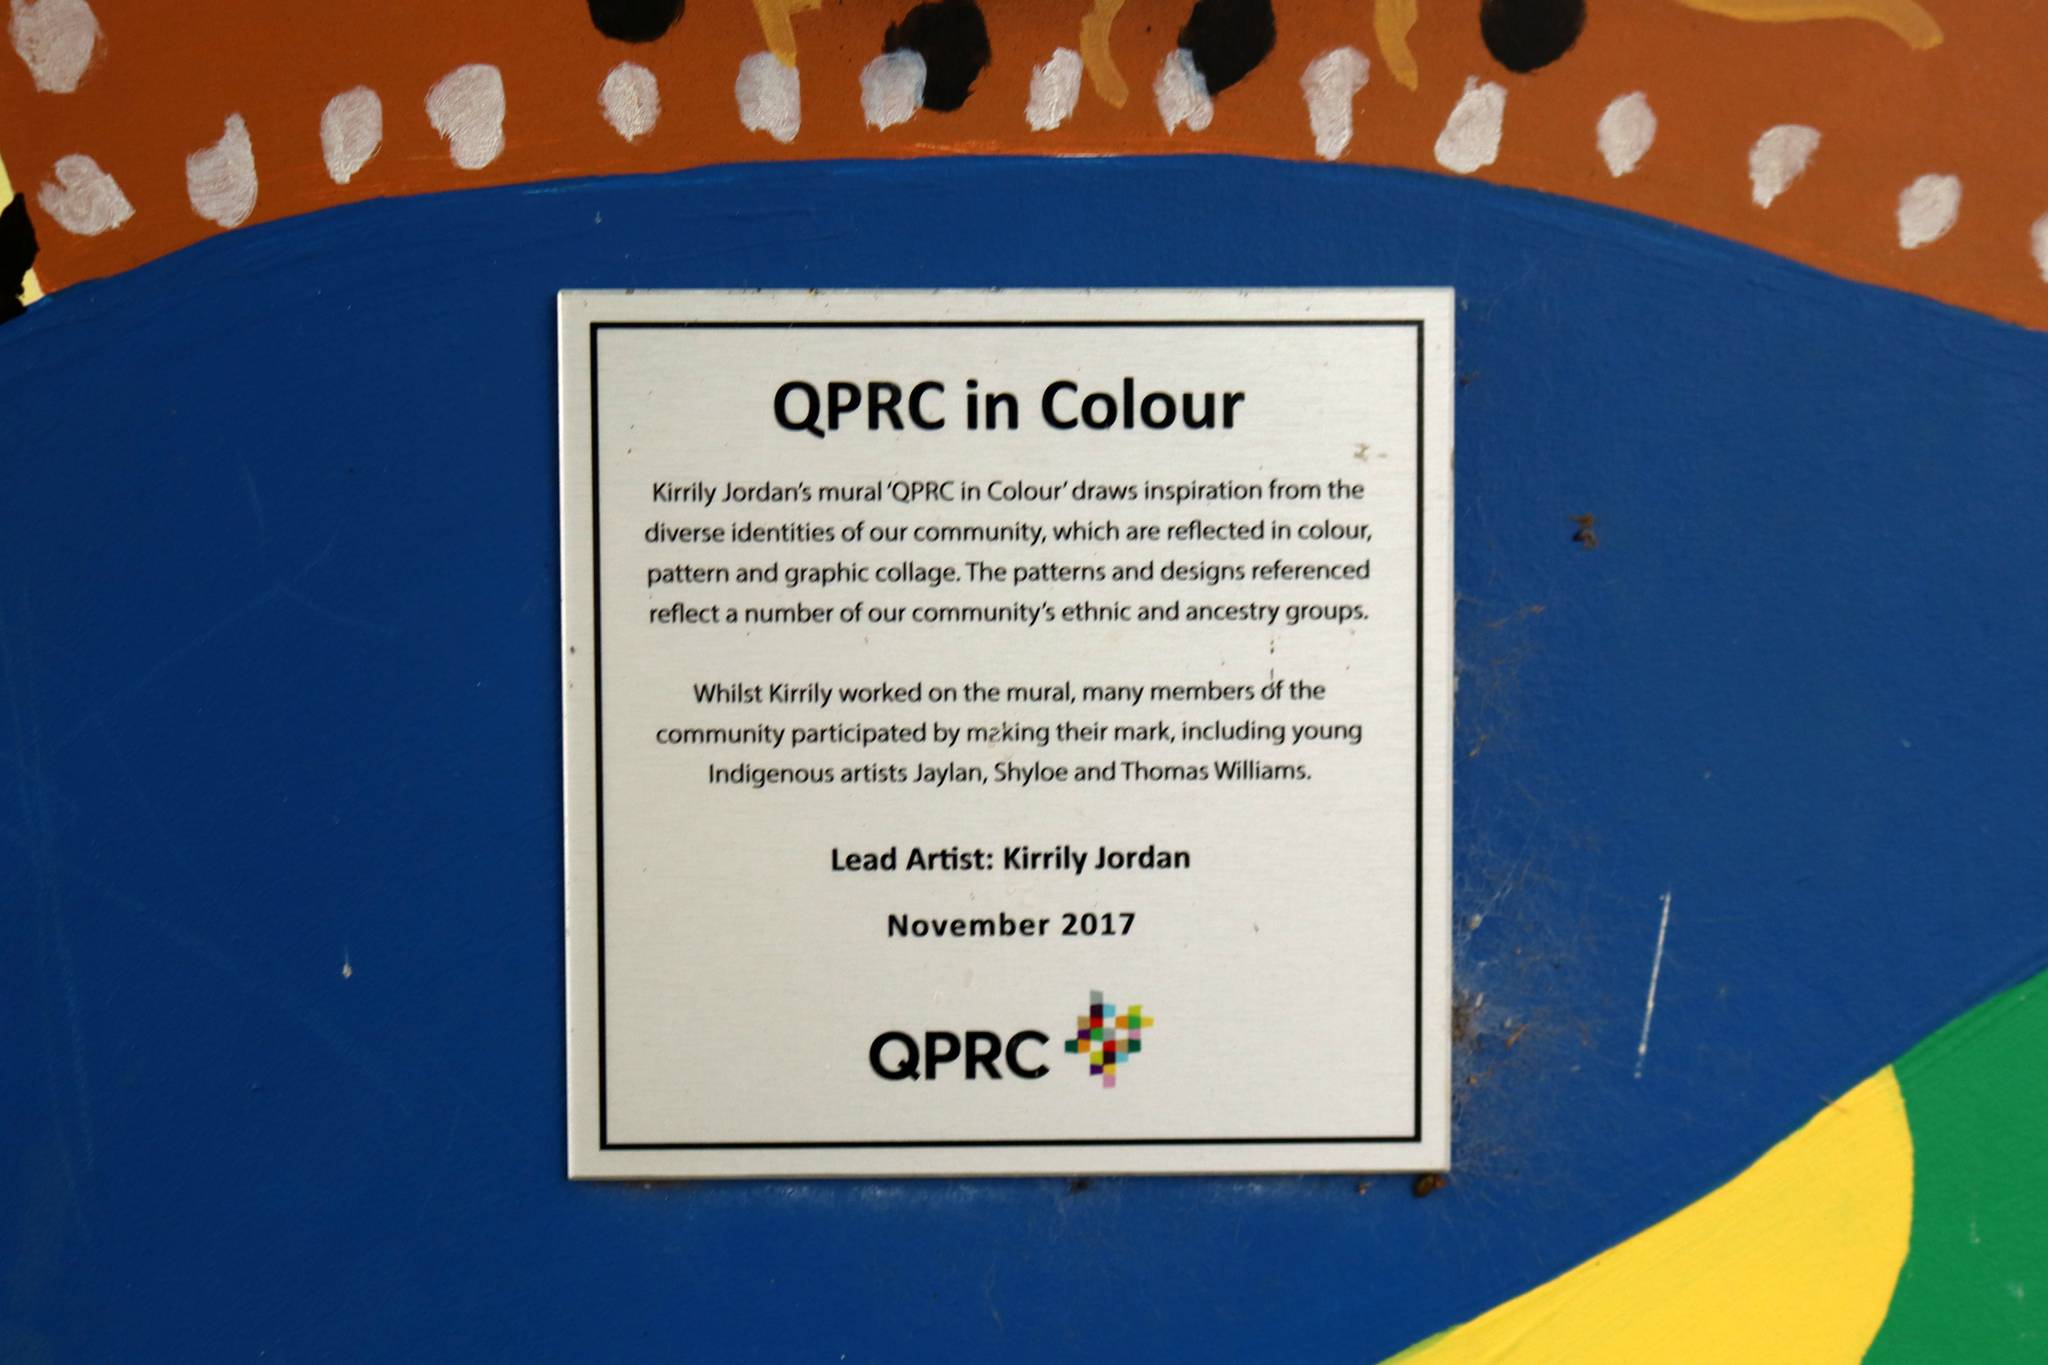 Kirrily Jordan&mdash;QPRC in Colour